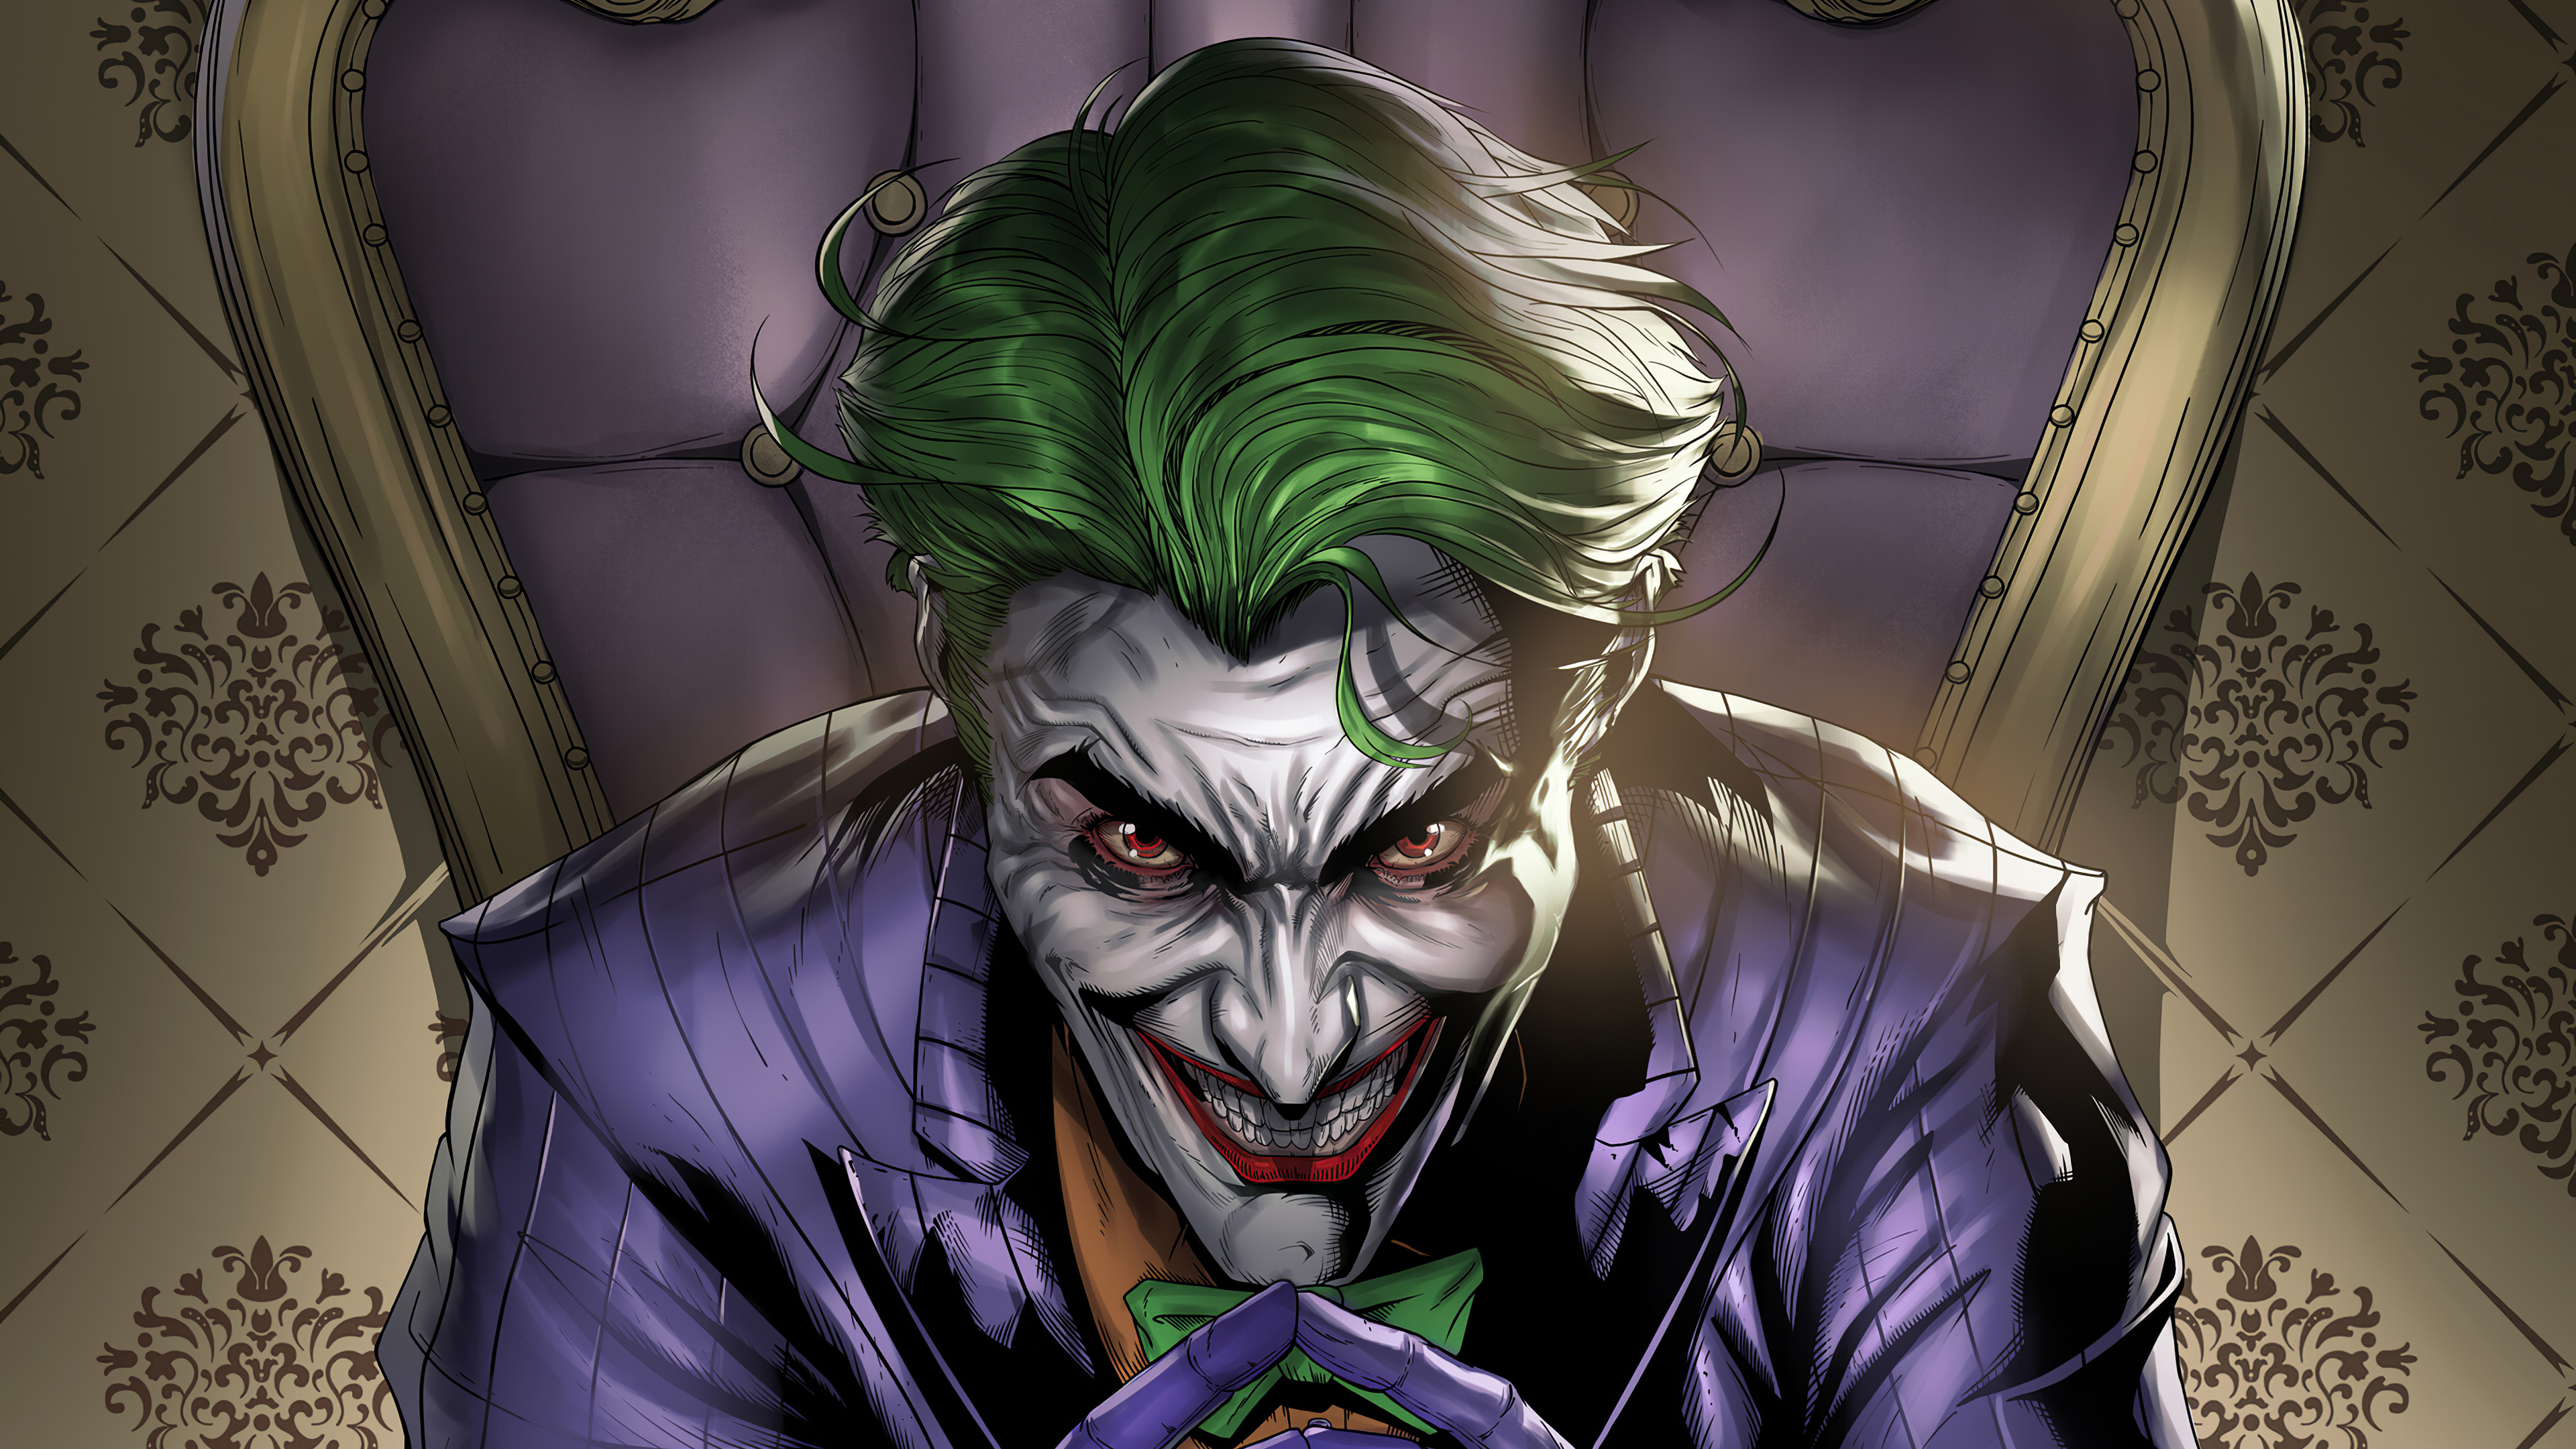 Joker 4k Ultra HD Wallpaper by Alex Trpcevski